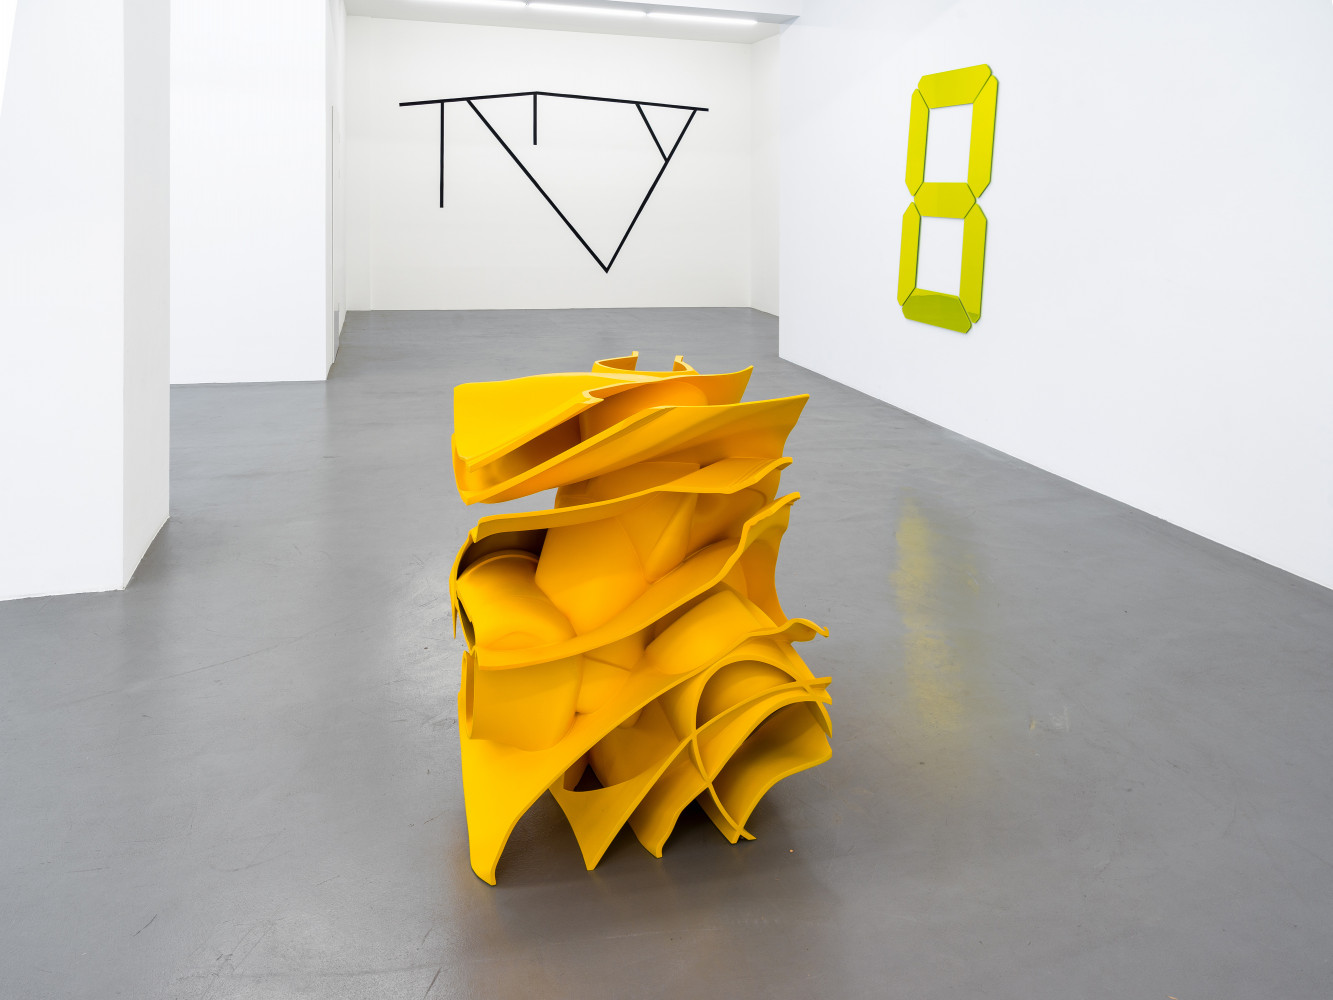 Tony Cragg, Tatsuo Miyajima, William Tucker, Installation view, Buchmann Galerie, 2020